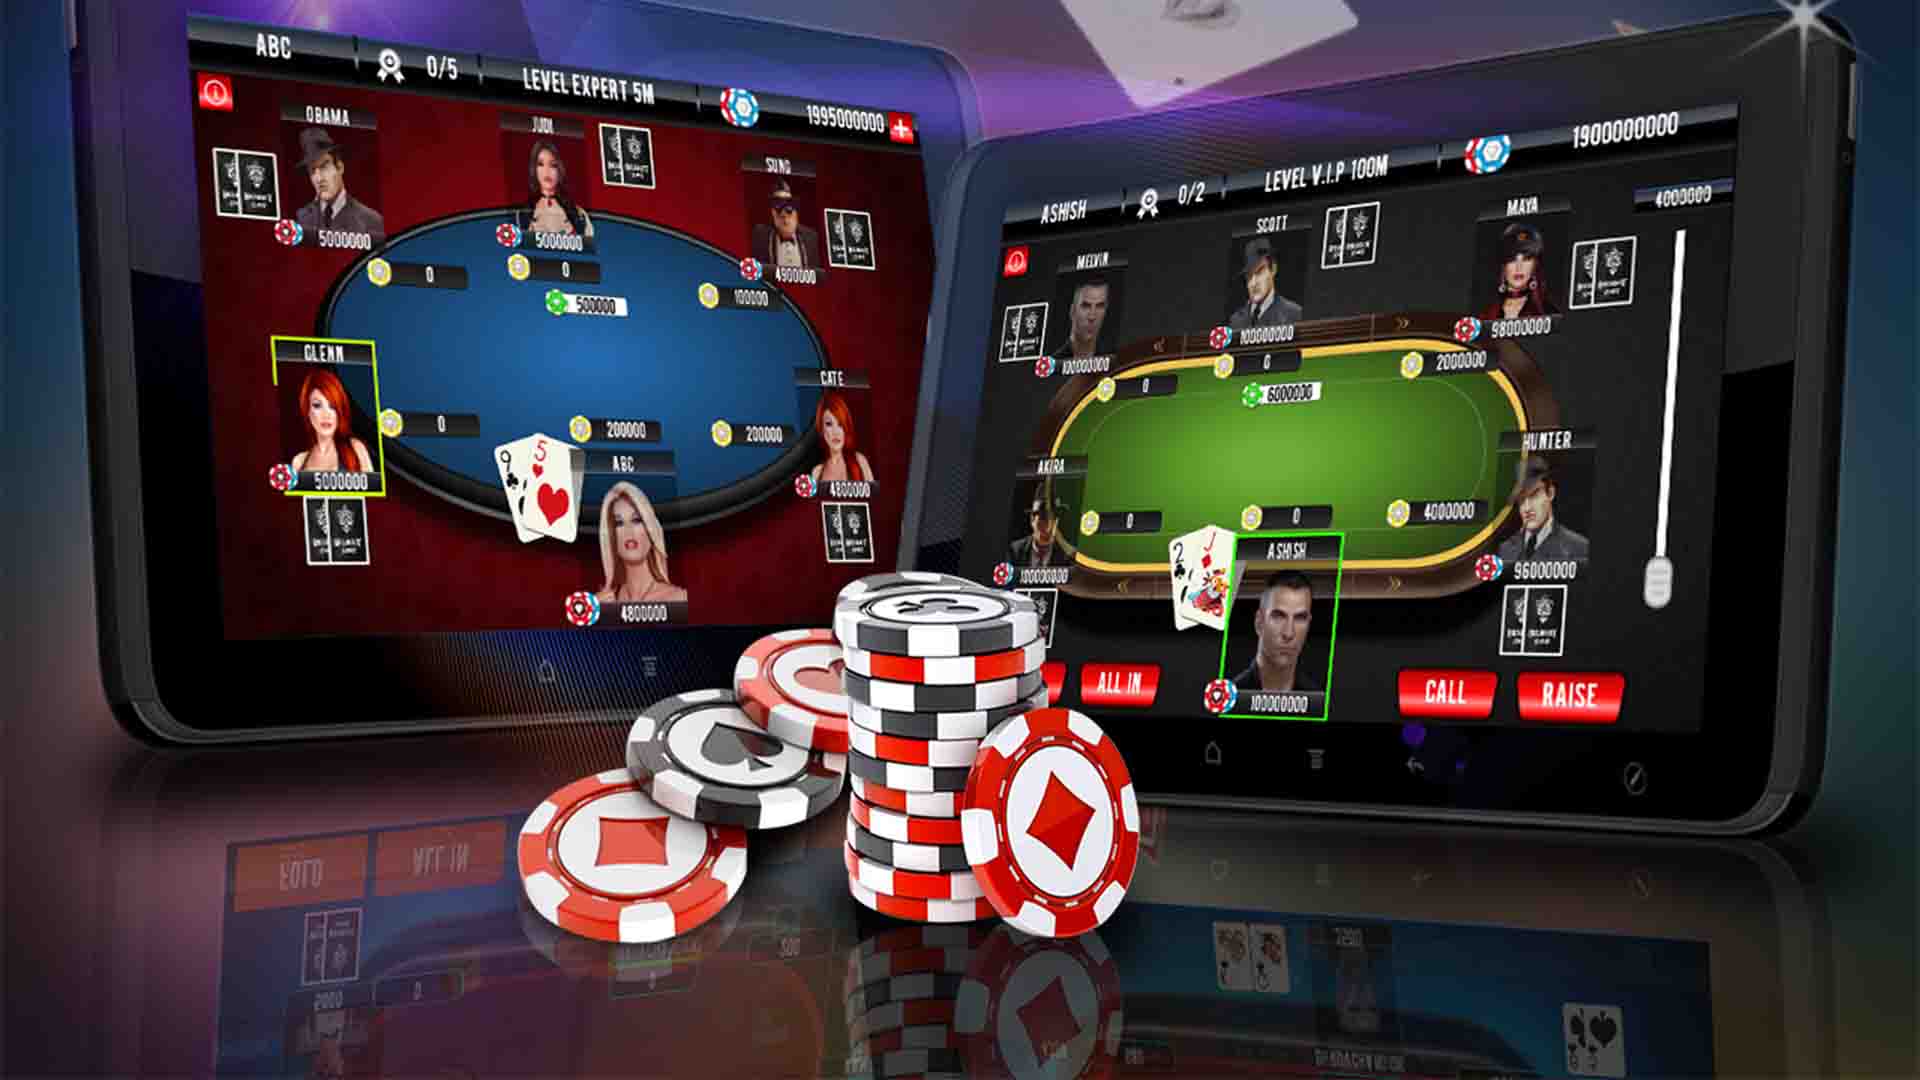 Basics of Playing Poker Online